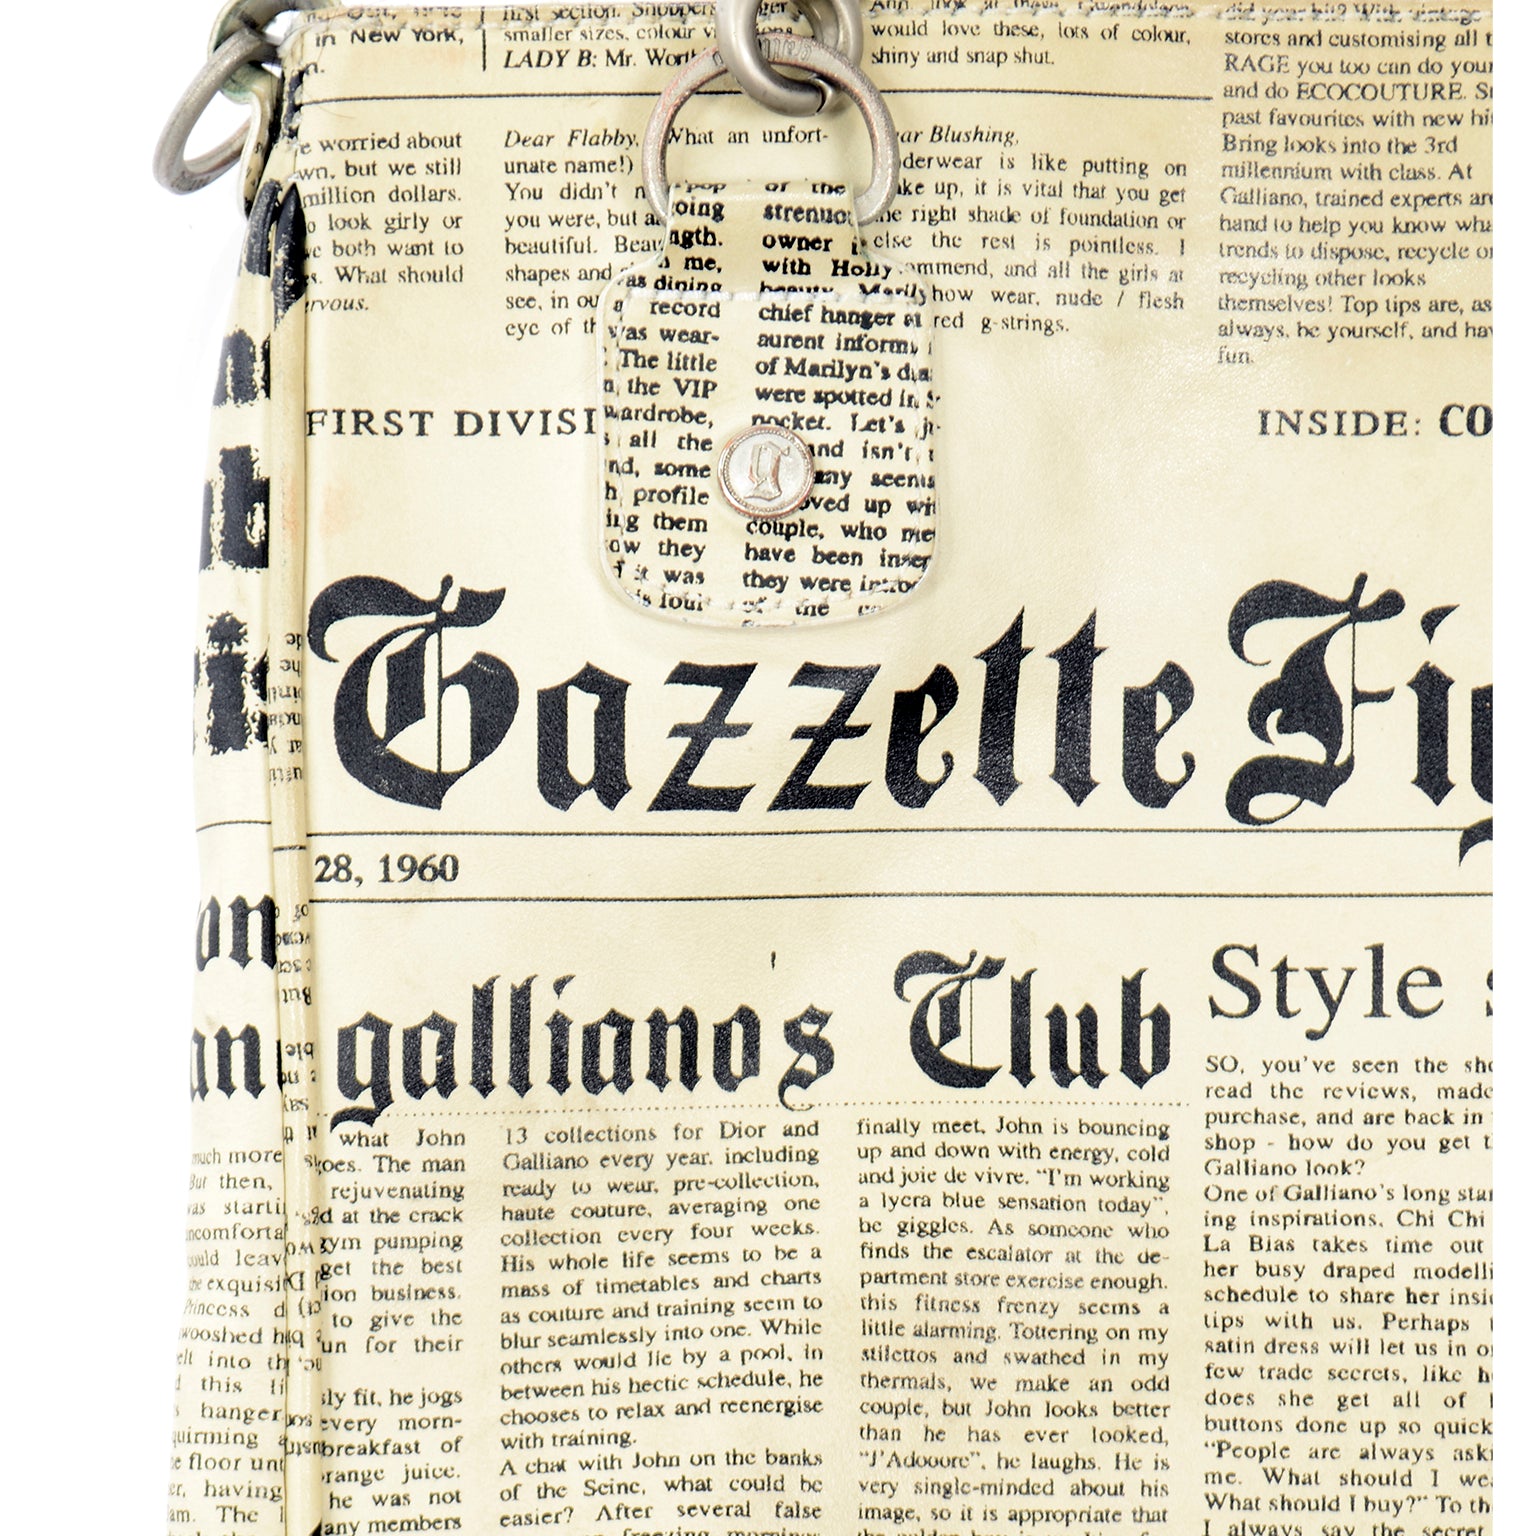 John Galliano Vintage Gazette Newspaper Newsprint Top Handle Bag